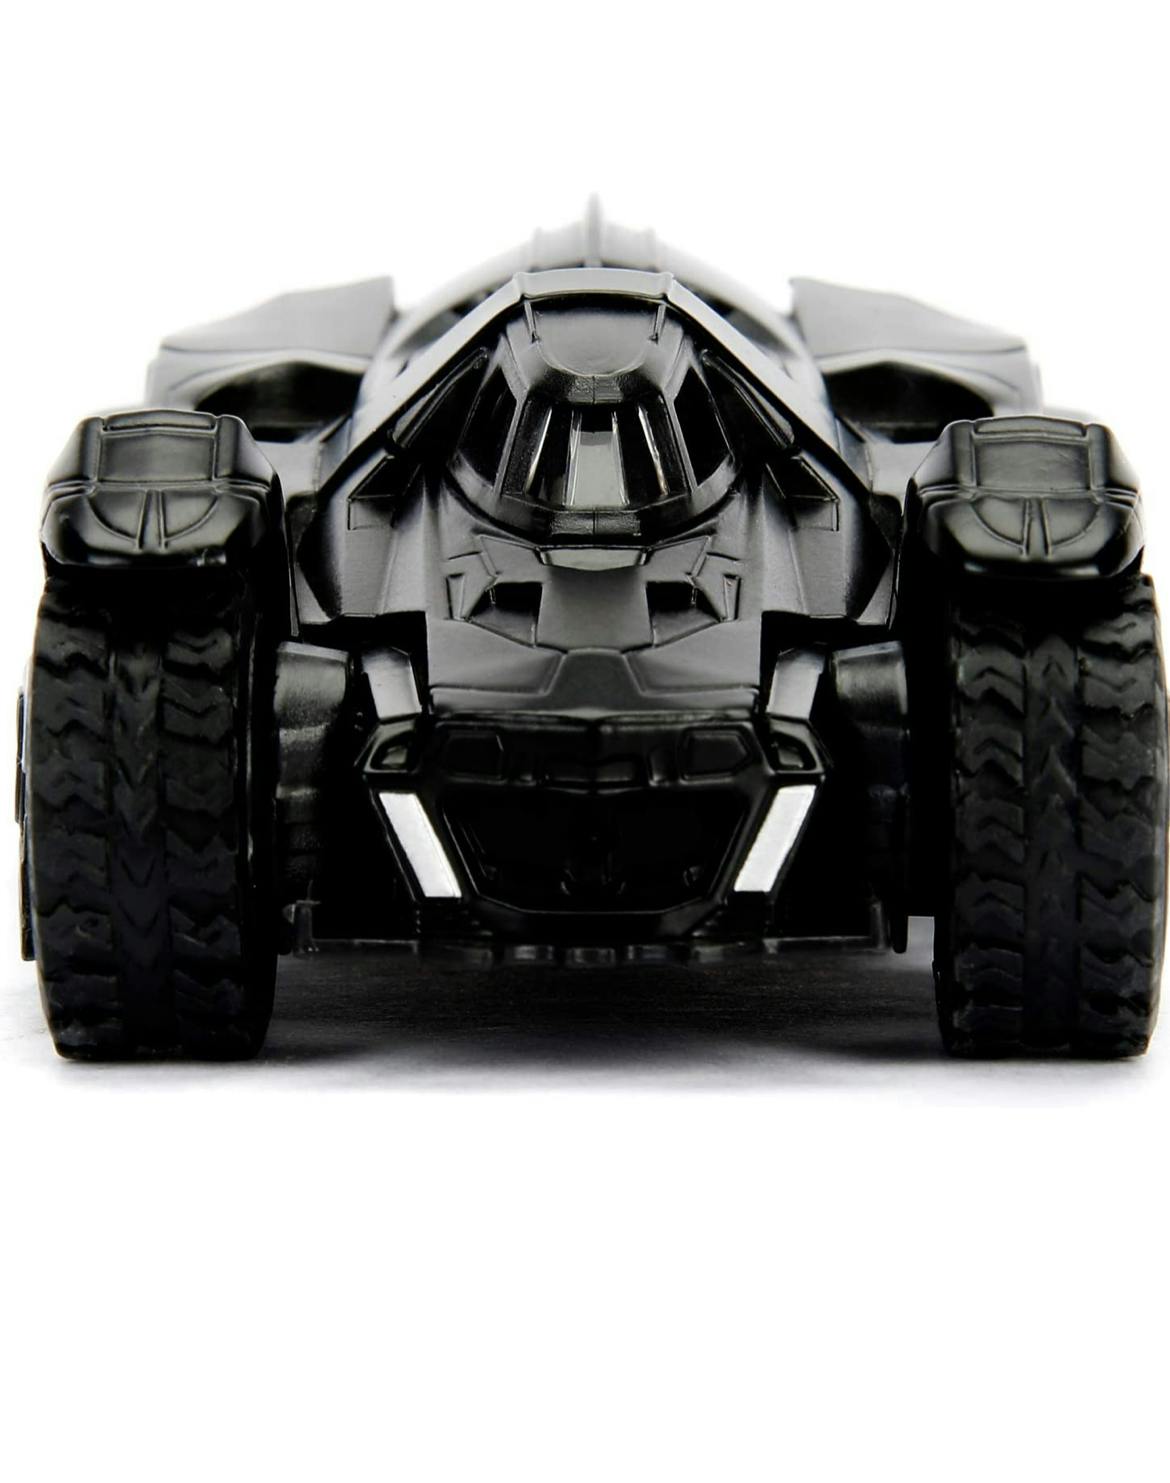 Jada Toys - Batman Arkham Knight Batmobile